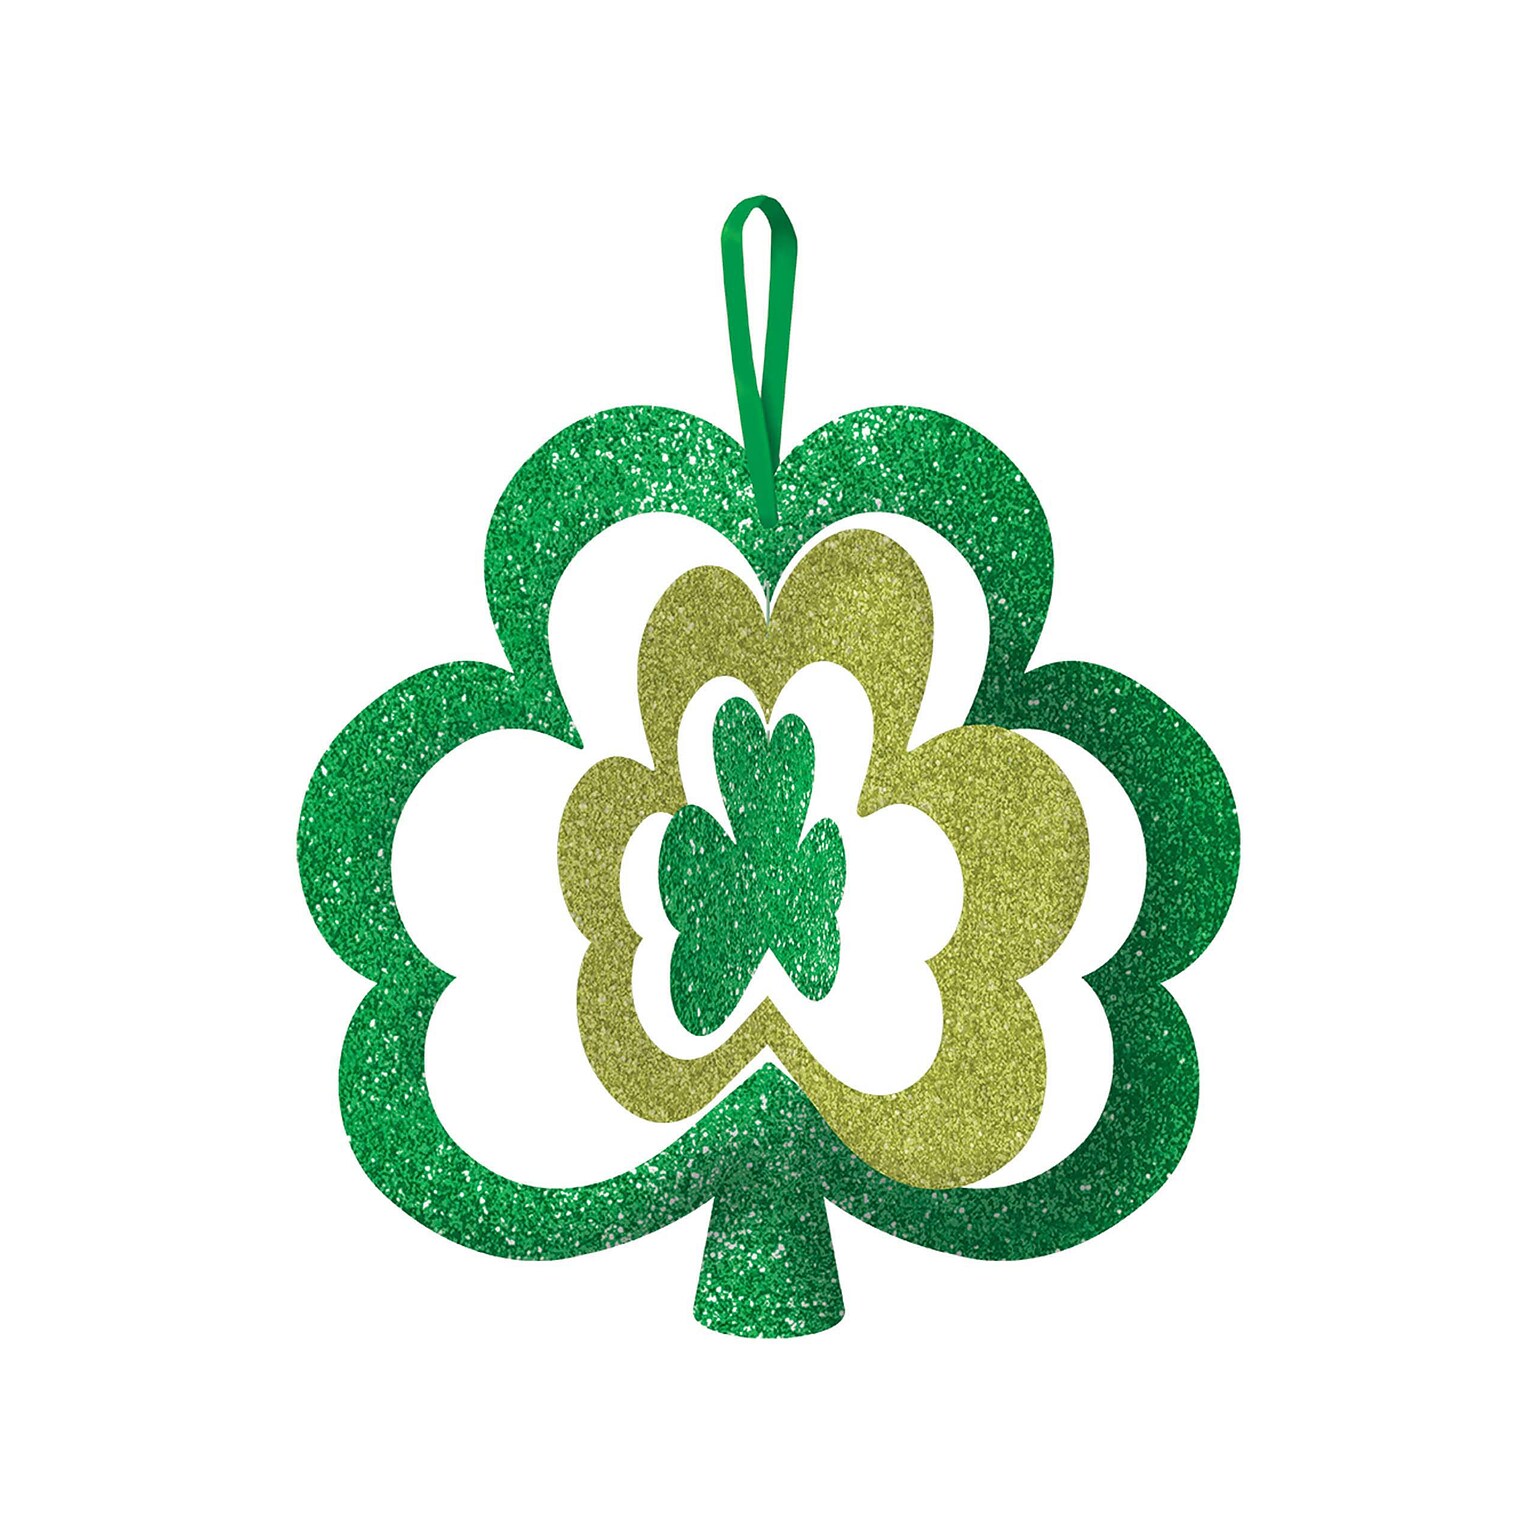 Amscan St. Patricks Day Spinning Shamrock Sign, Green, 4/Pack (241367)